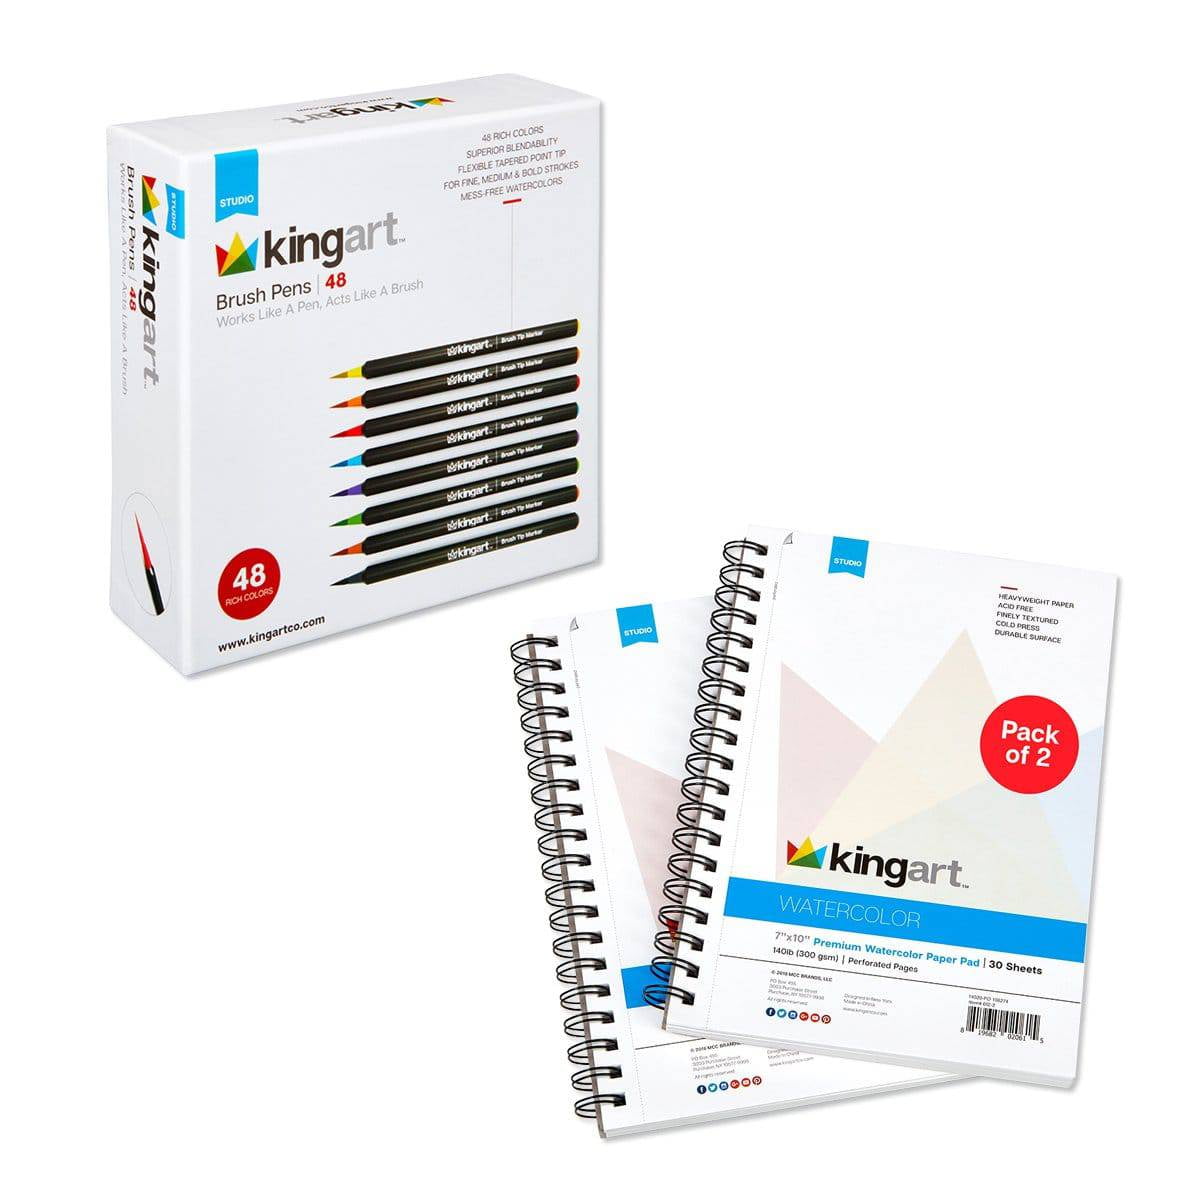 Kingart 50 Pieces Brush Pen and Paper Bundle - Walmart.com